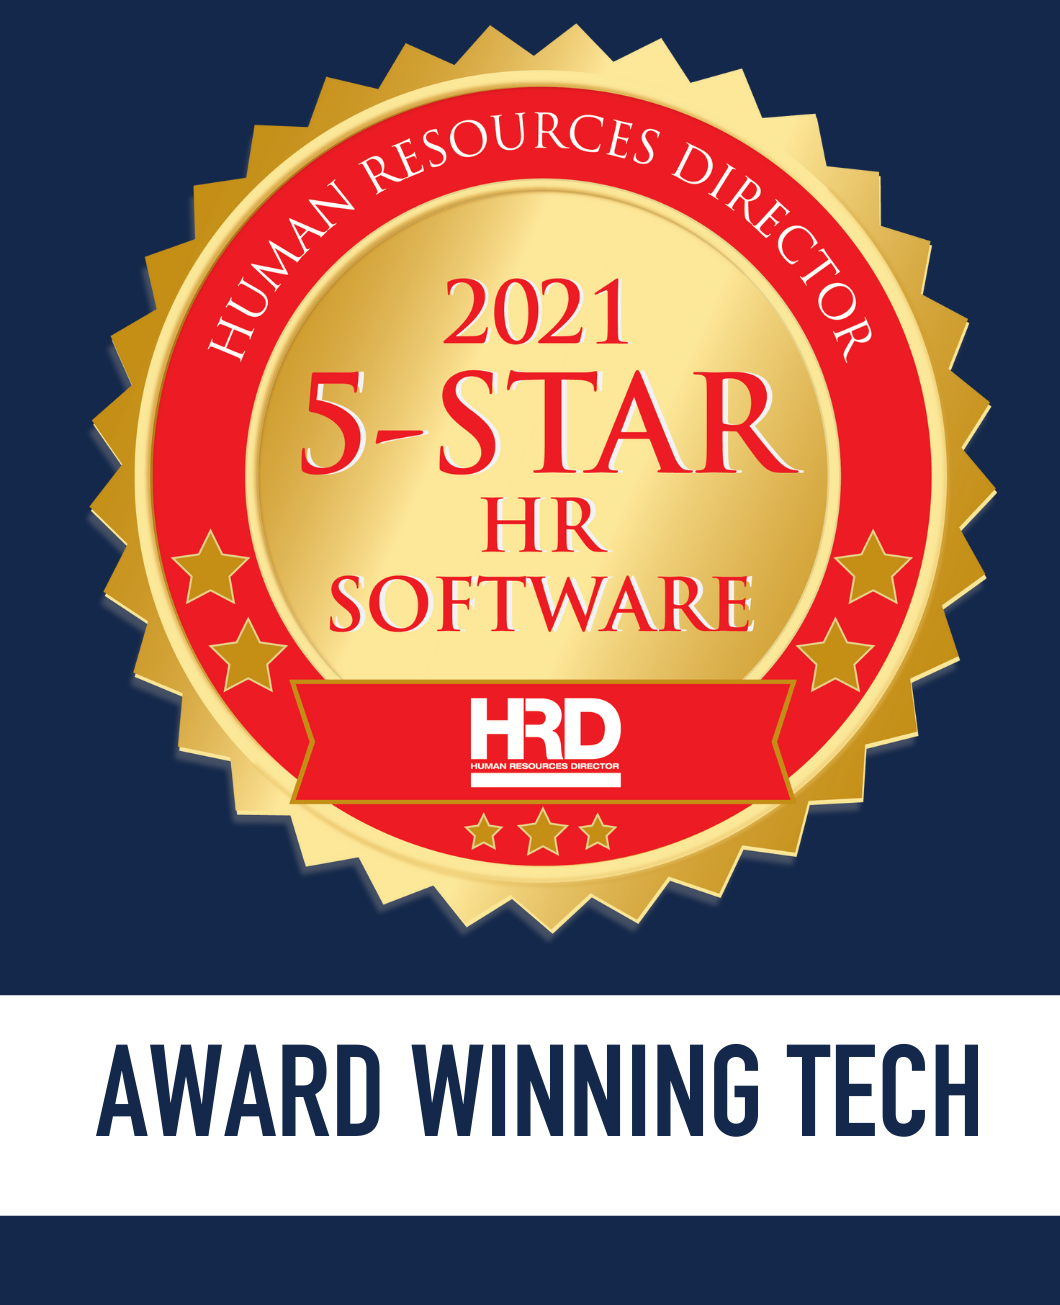 HRD awards Springboard the ‘5-Star HR Software for 2021’